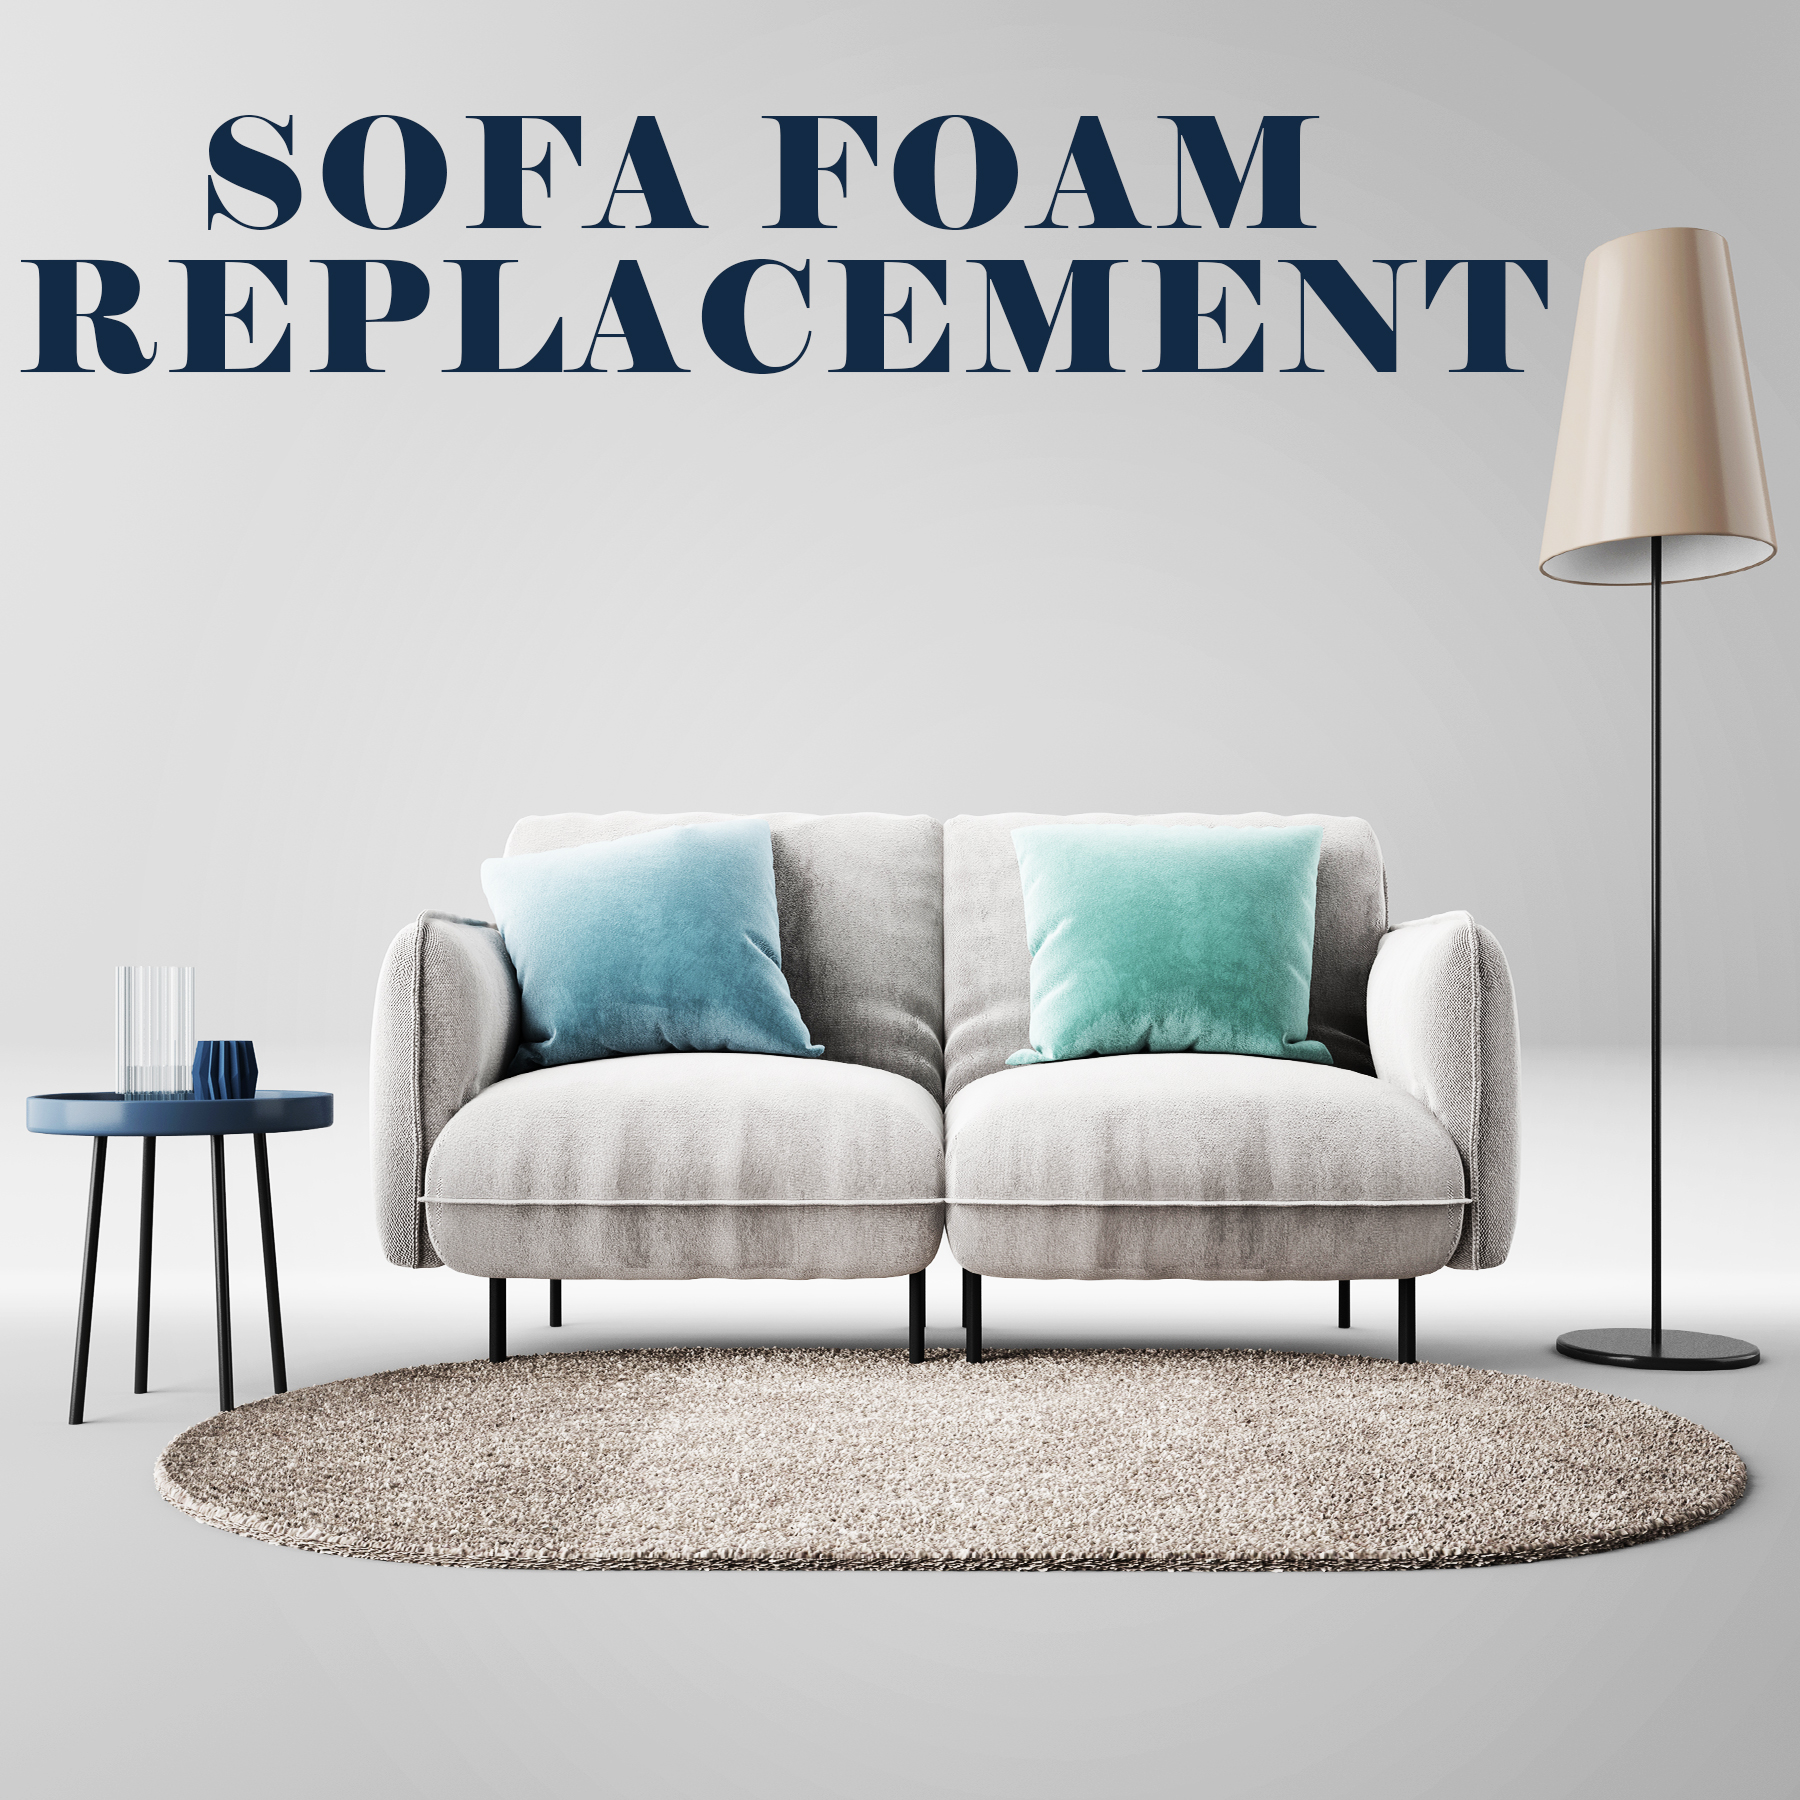 Sofa Foam Replacement